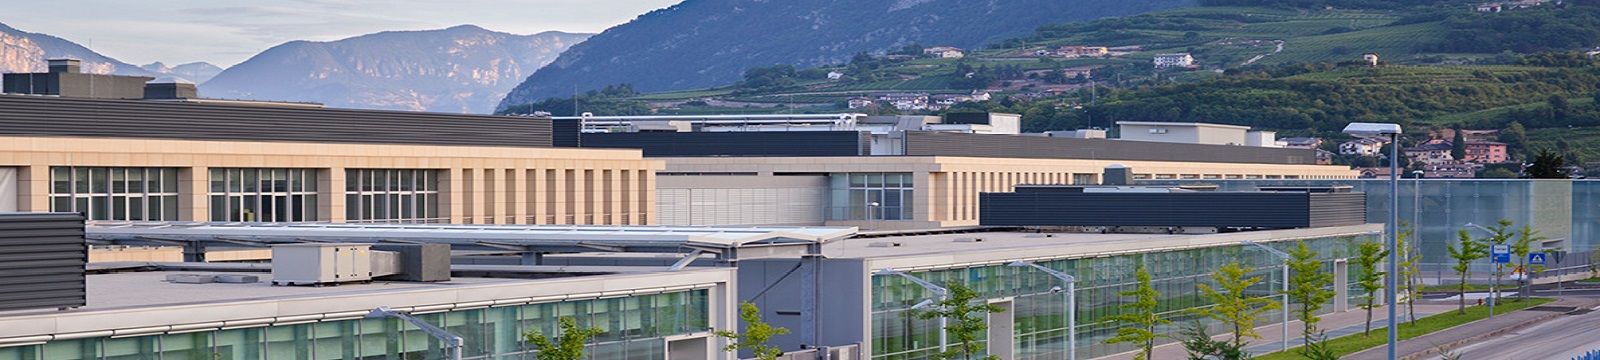 The University of Trento joins ICDI